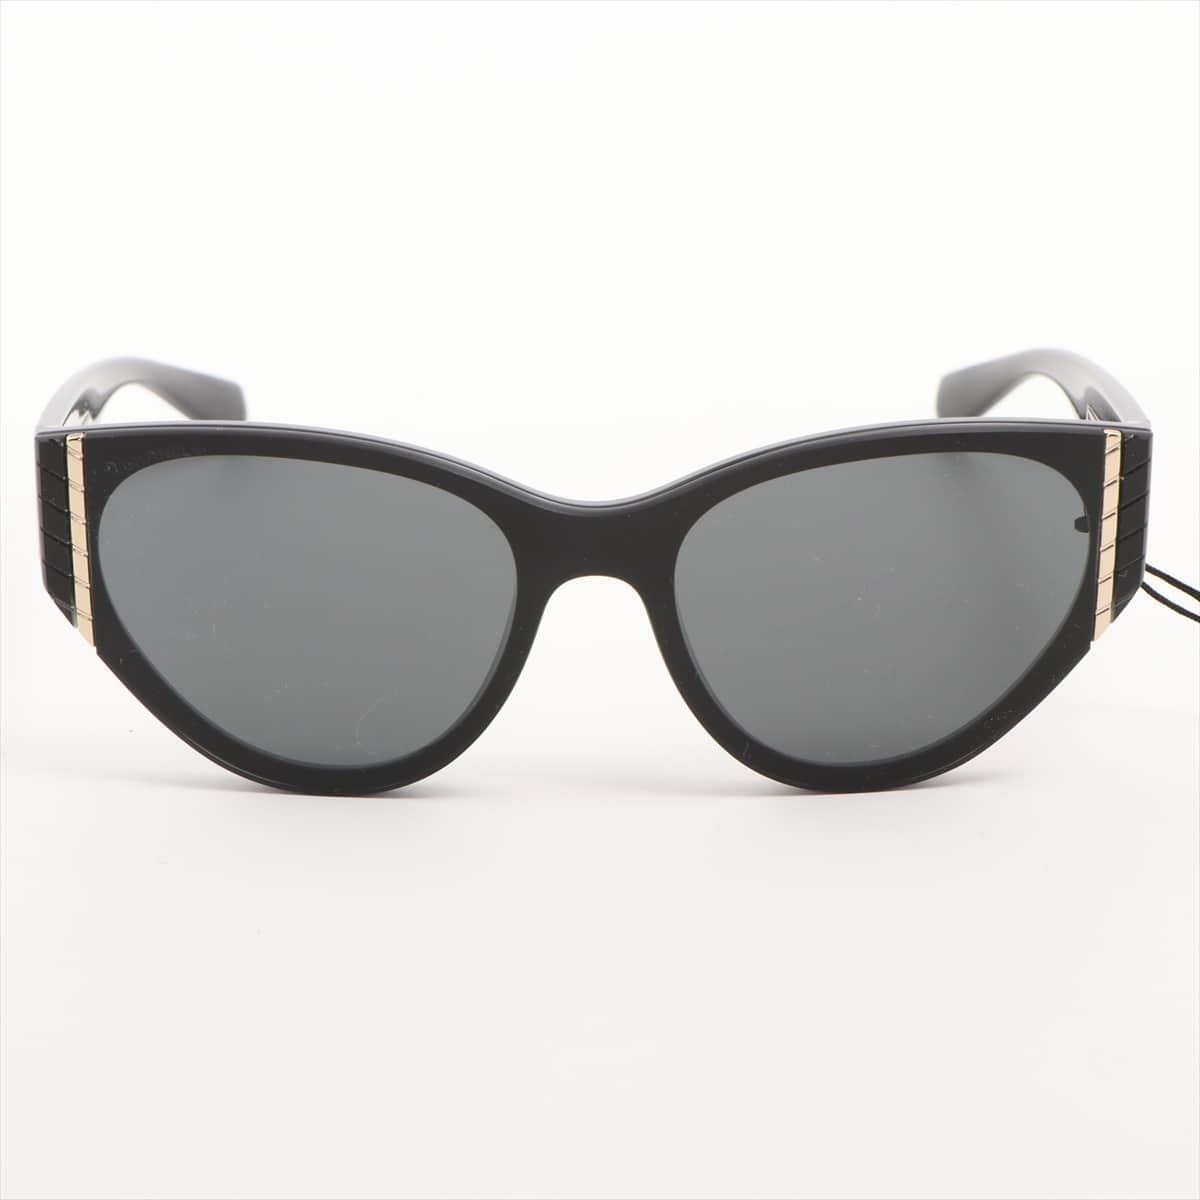 Chanel 6054 Sunglasses Plastic Black